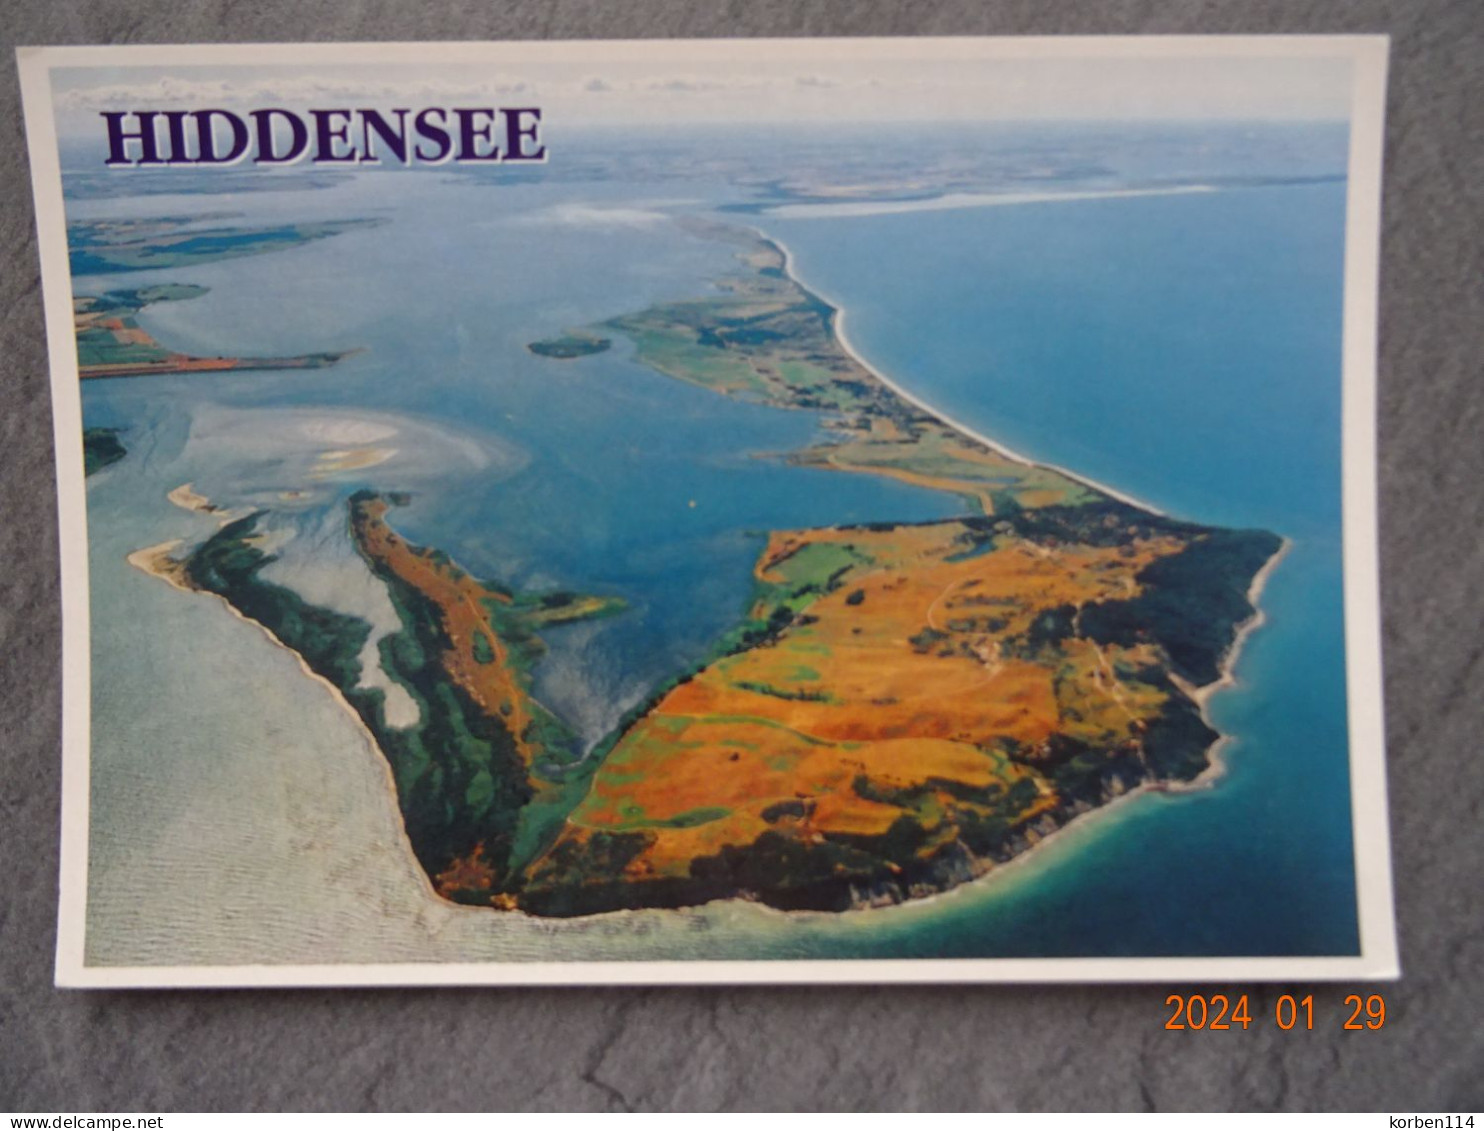 HIDDENSEE - Hiddensee